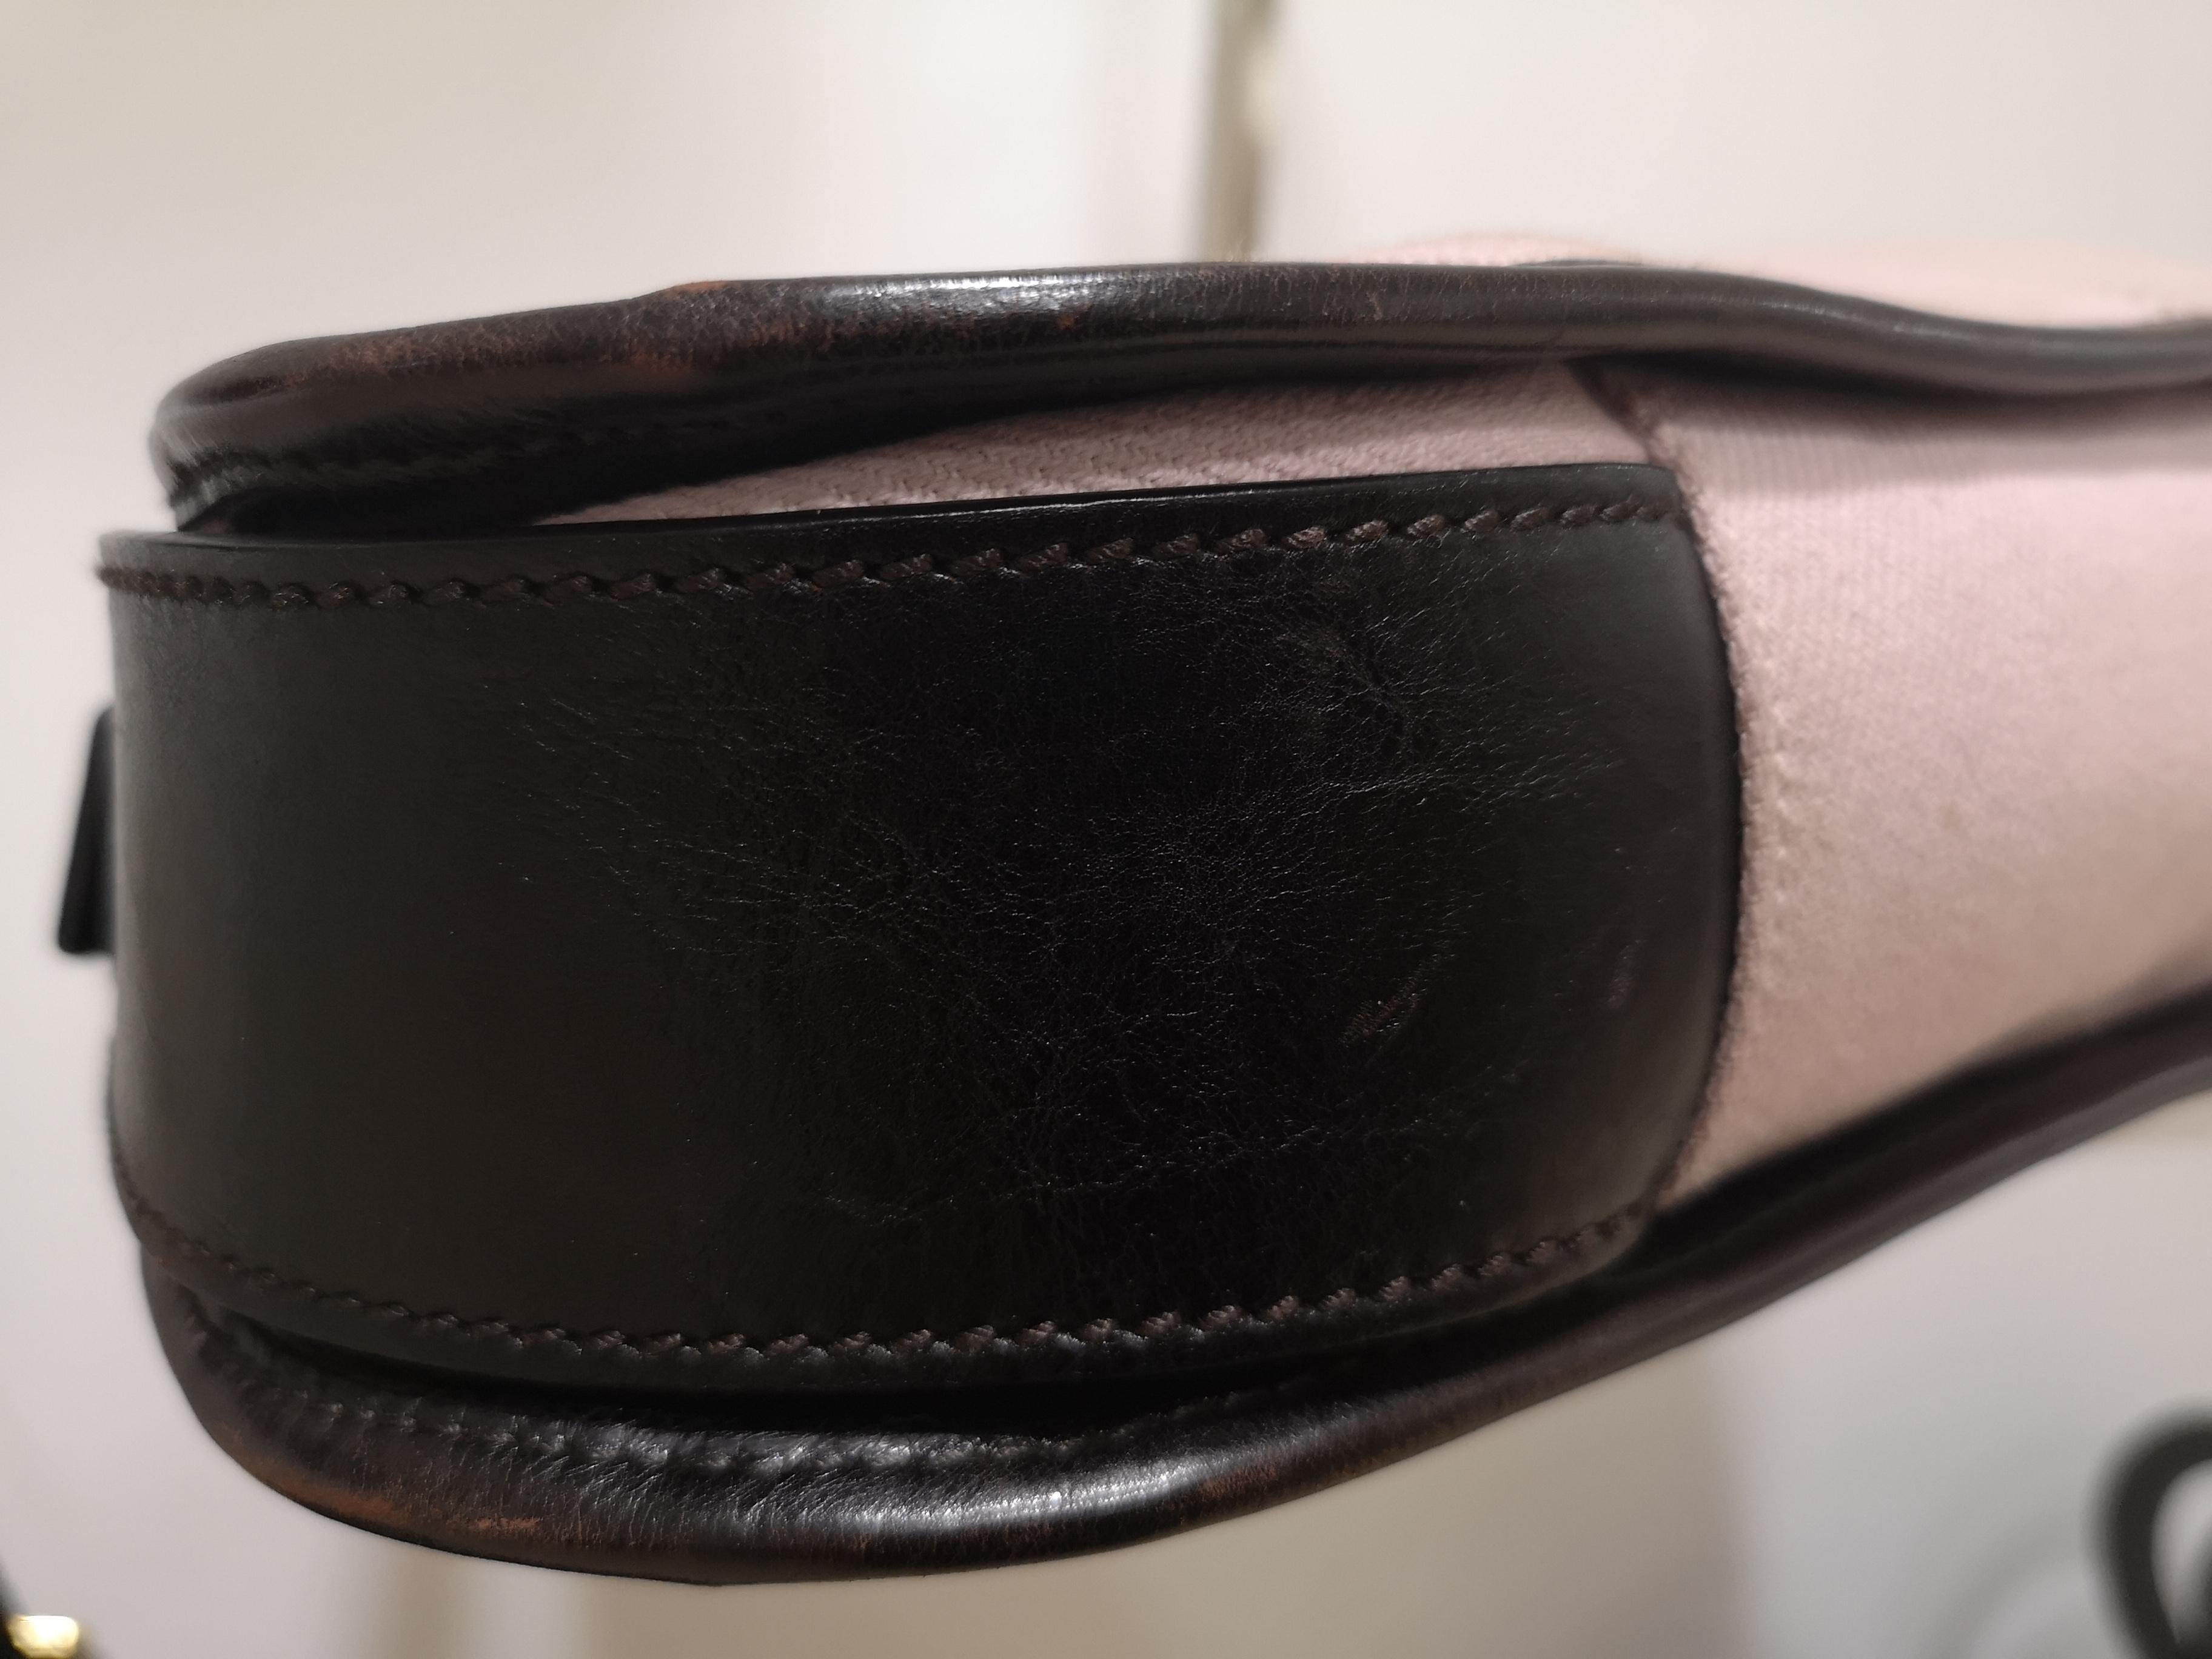 Yves Saint Laurent Pink fabric Brown leather Mombasa Bag
measurements: h 23 * 33 * 13 cm